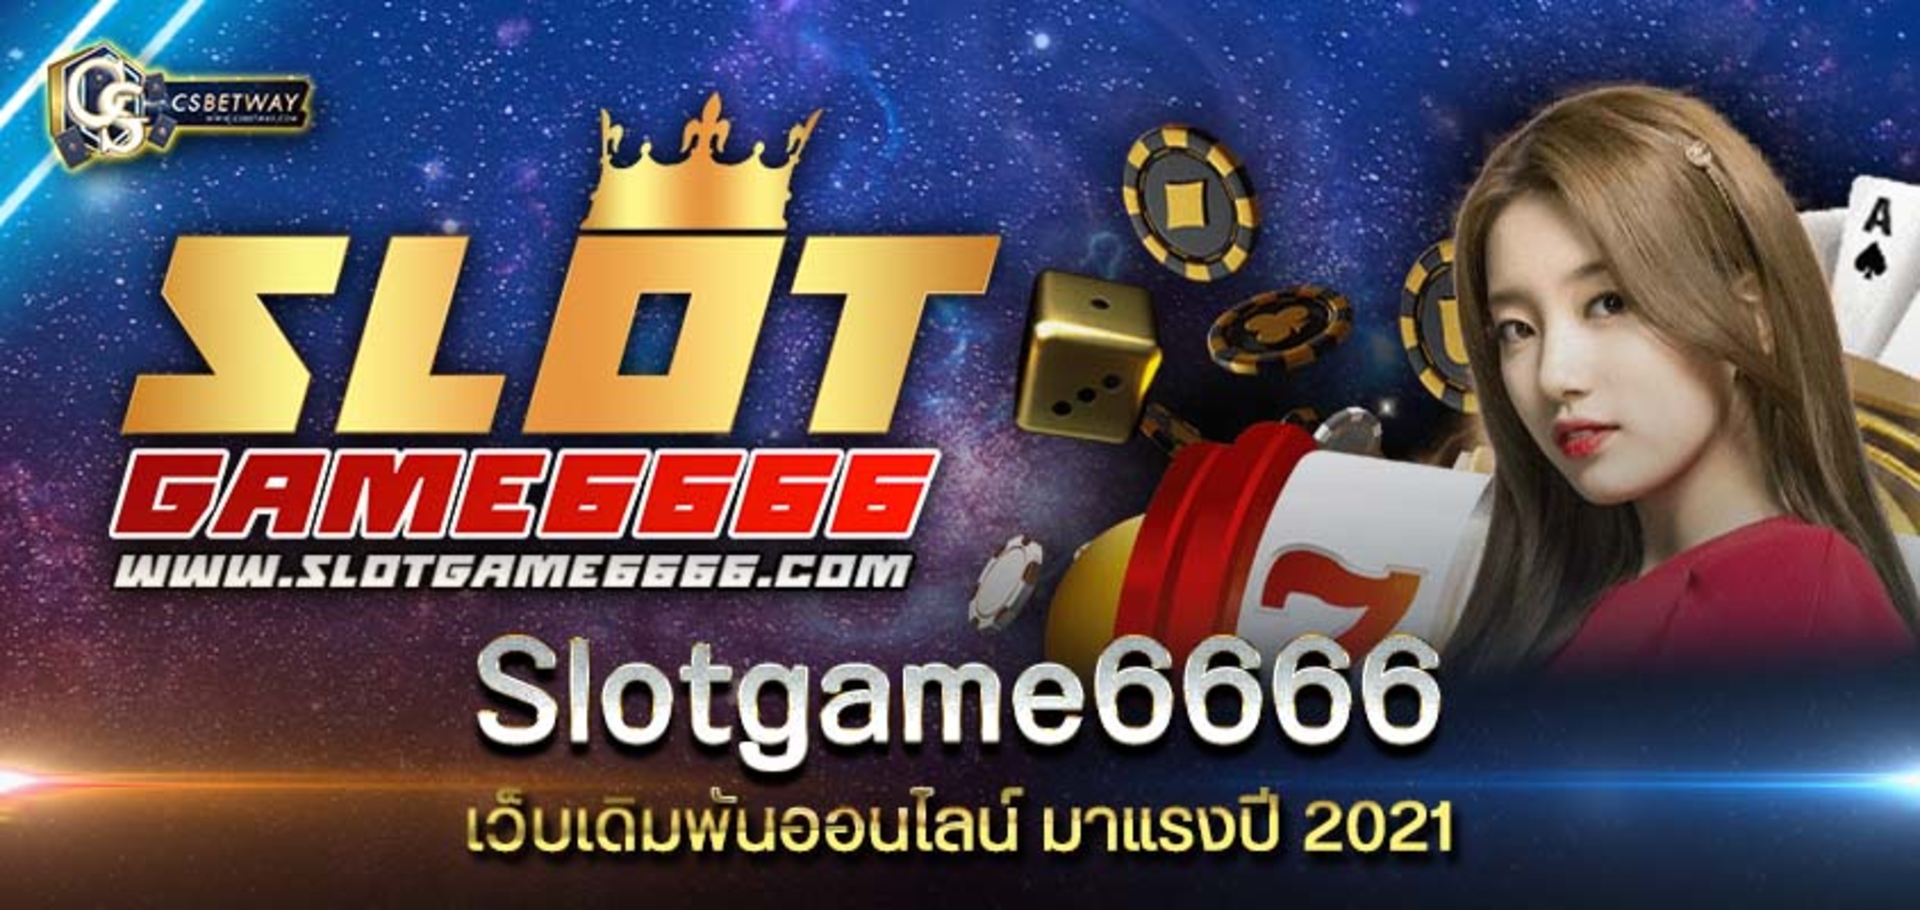 Slotgame6666 เว็บเดิมพันออนไลน์มาแรง บริการ ทดลองเล่น สล็อต game6666 ฟรี สล็อตแตกบ่อย ฝากถอนออโต้ 24 ชม. สมัครวันนี้ ฟรีเครดิต 